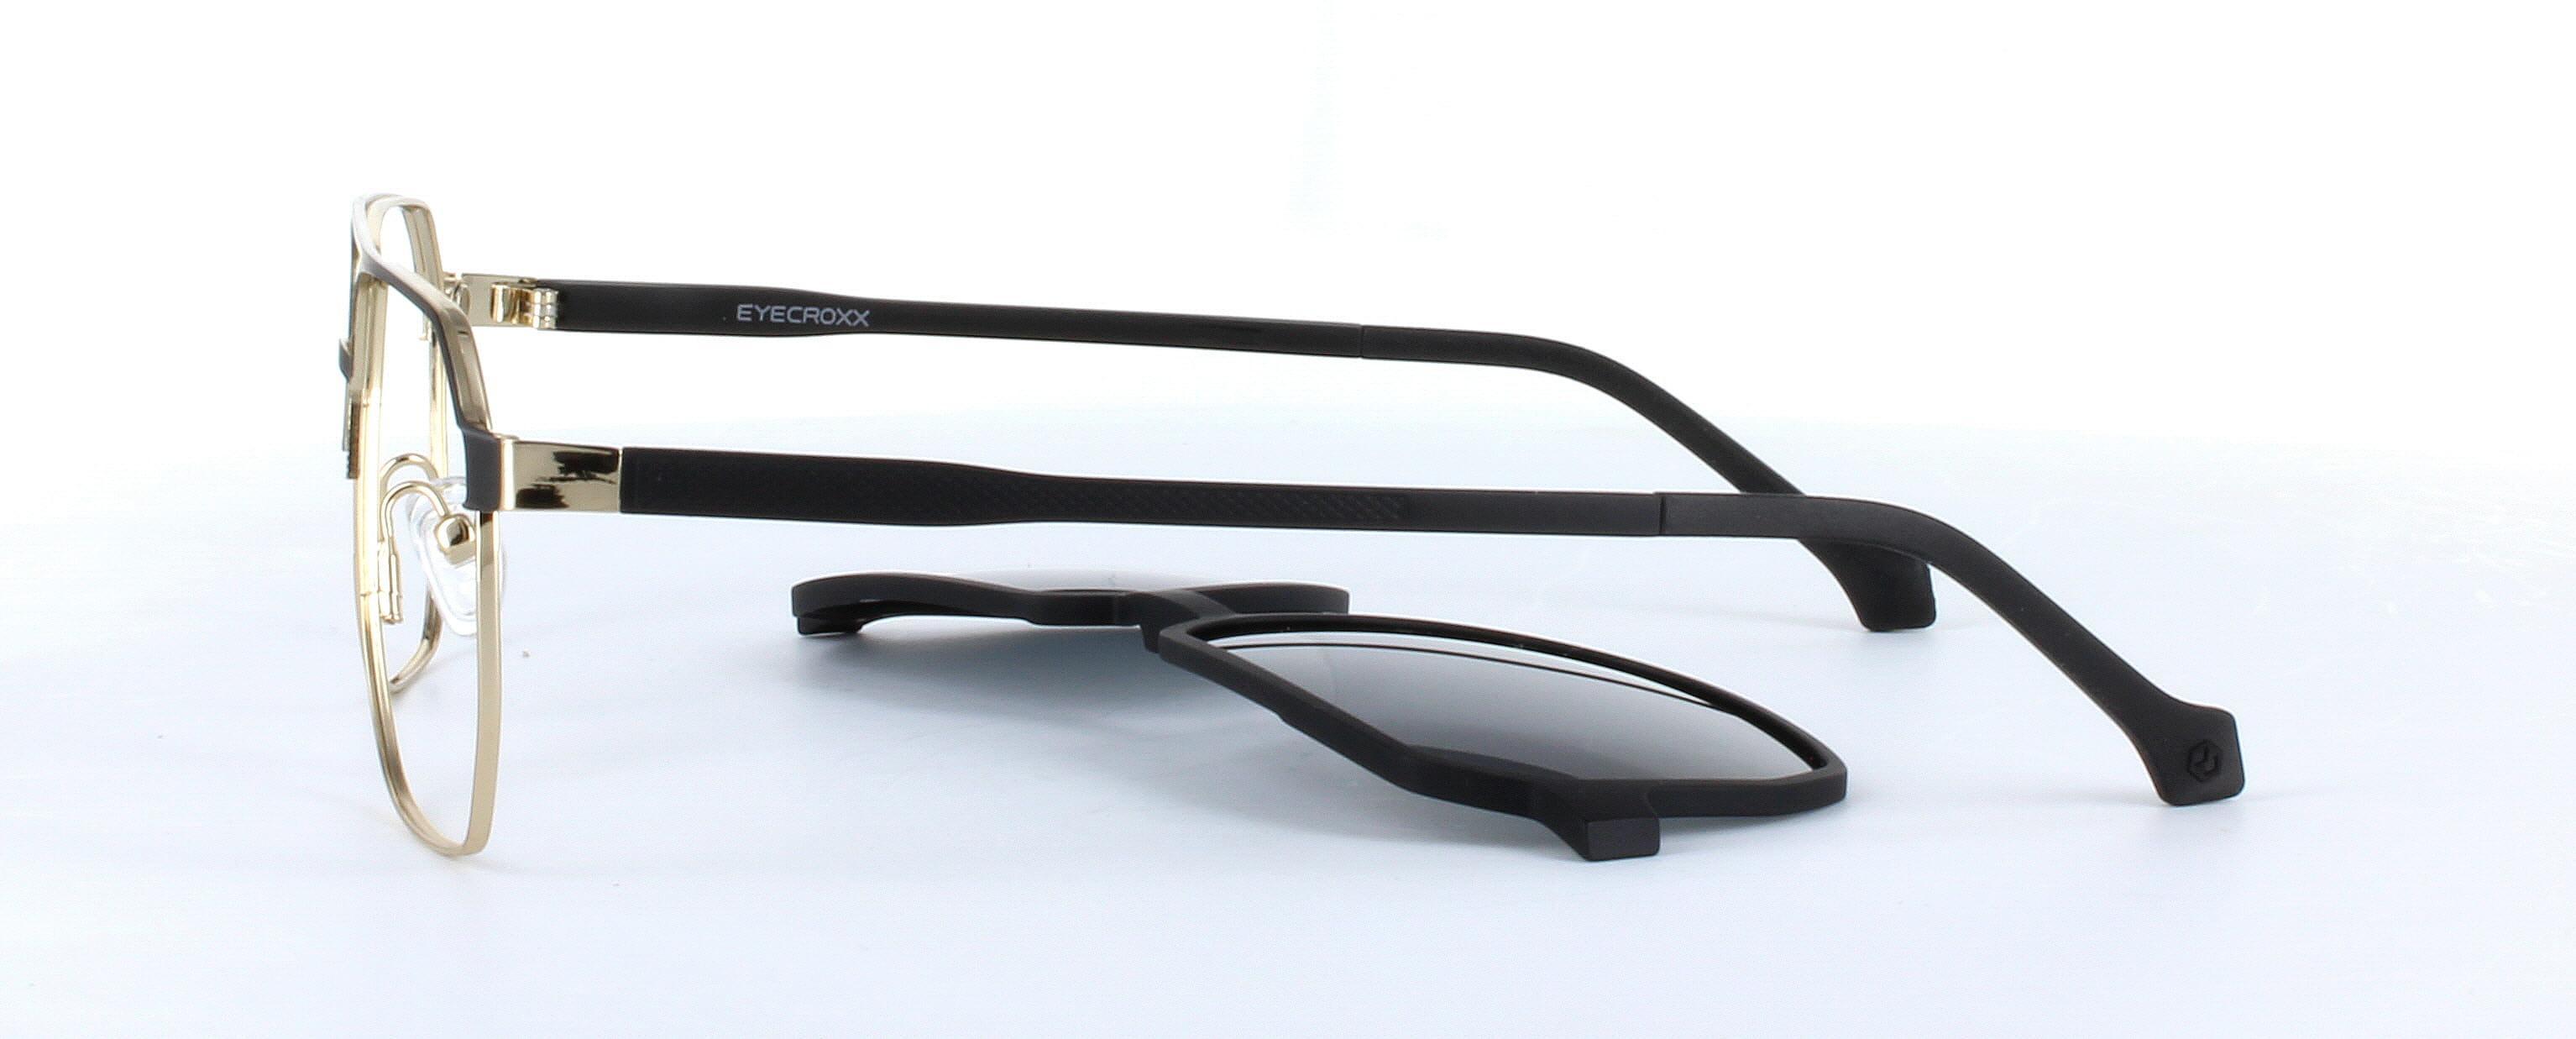 Eyecroxx 617 Black Full Rim Aviator Metal Glasses - Image View 2